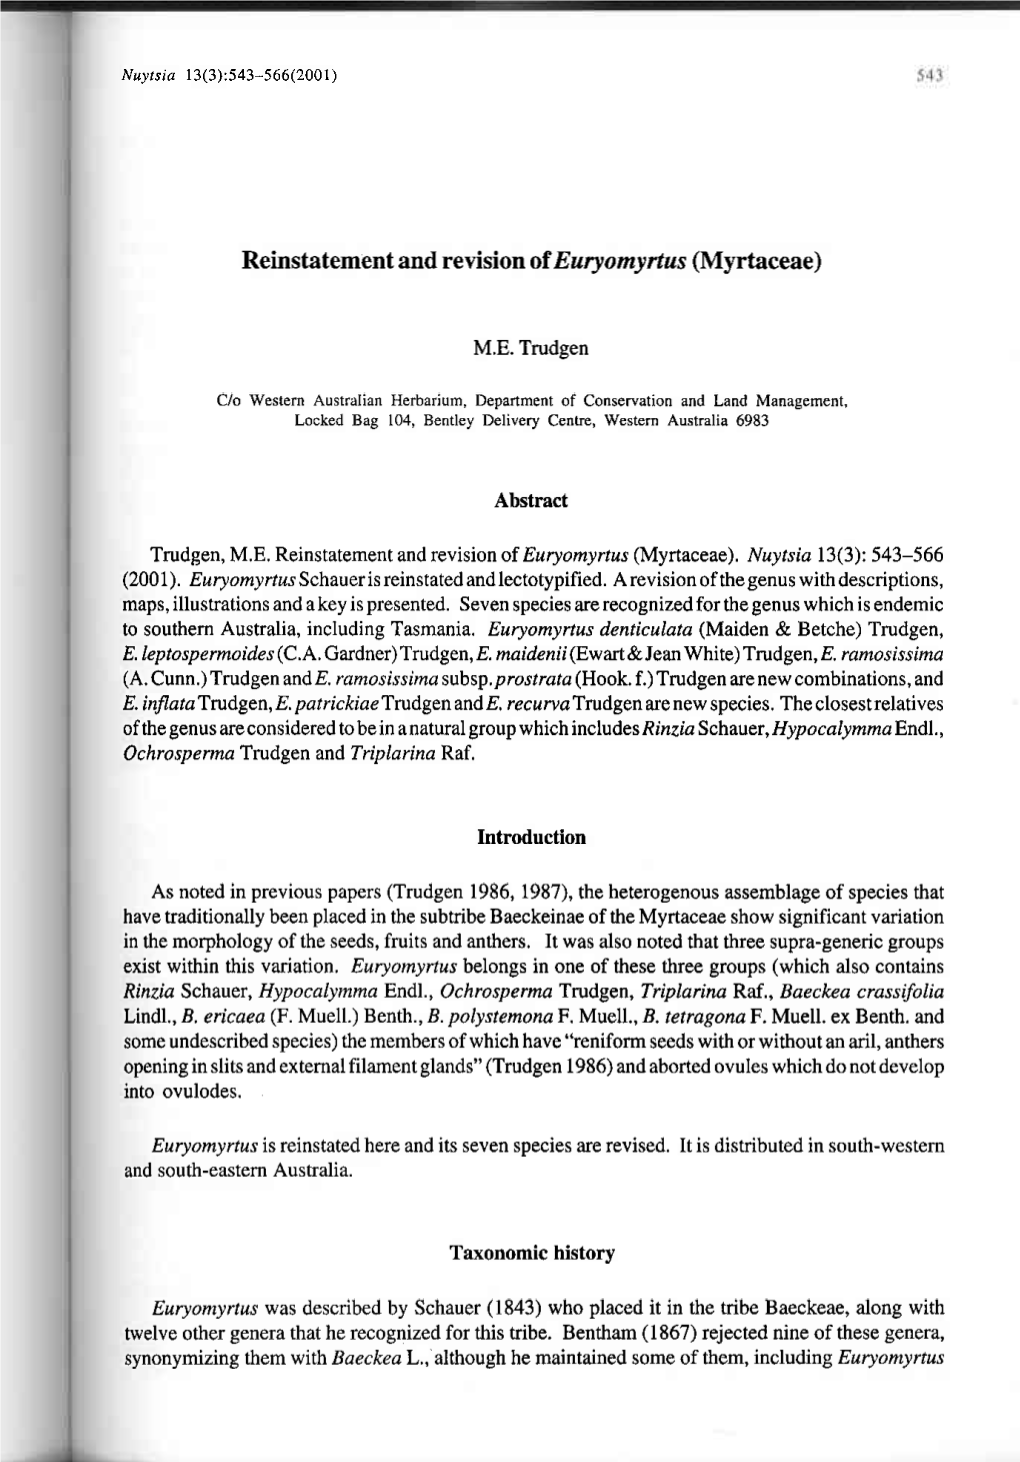 Reinstatement and Revision of Euryomyrtus